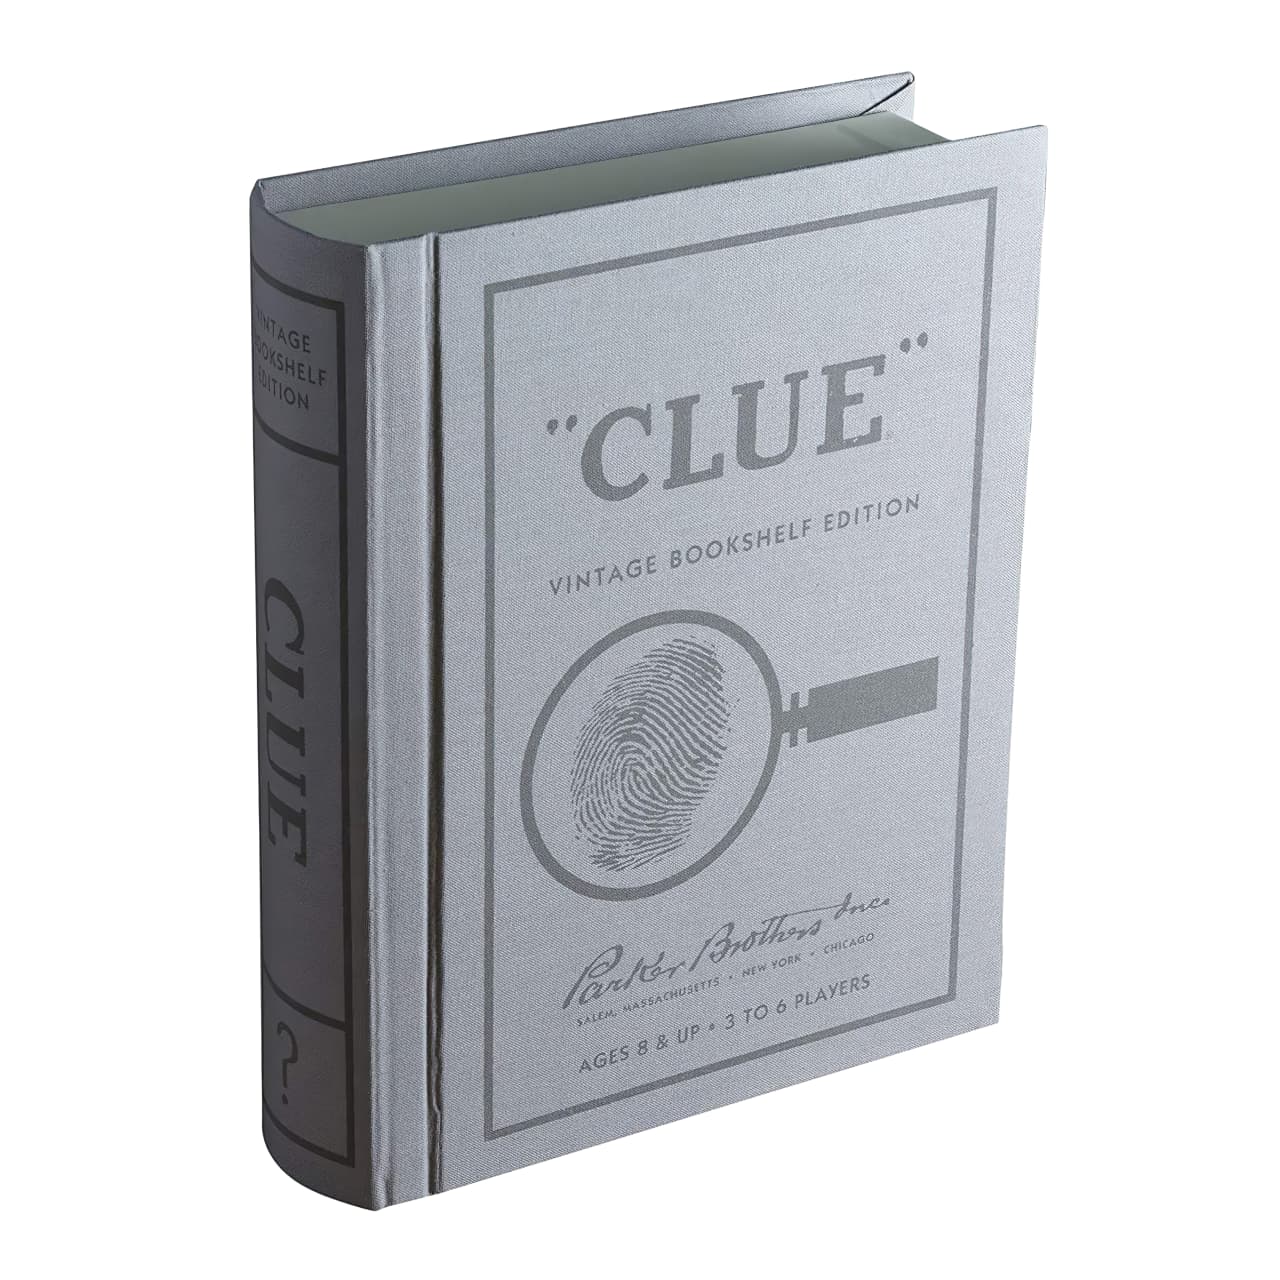 Company Clue Vintage Bookshelf Edition